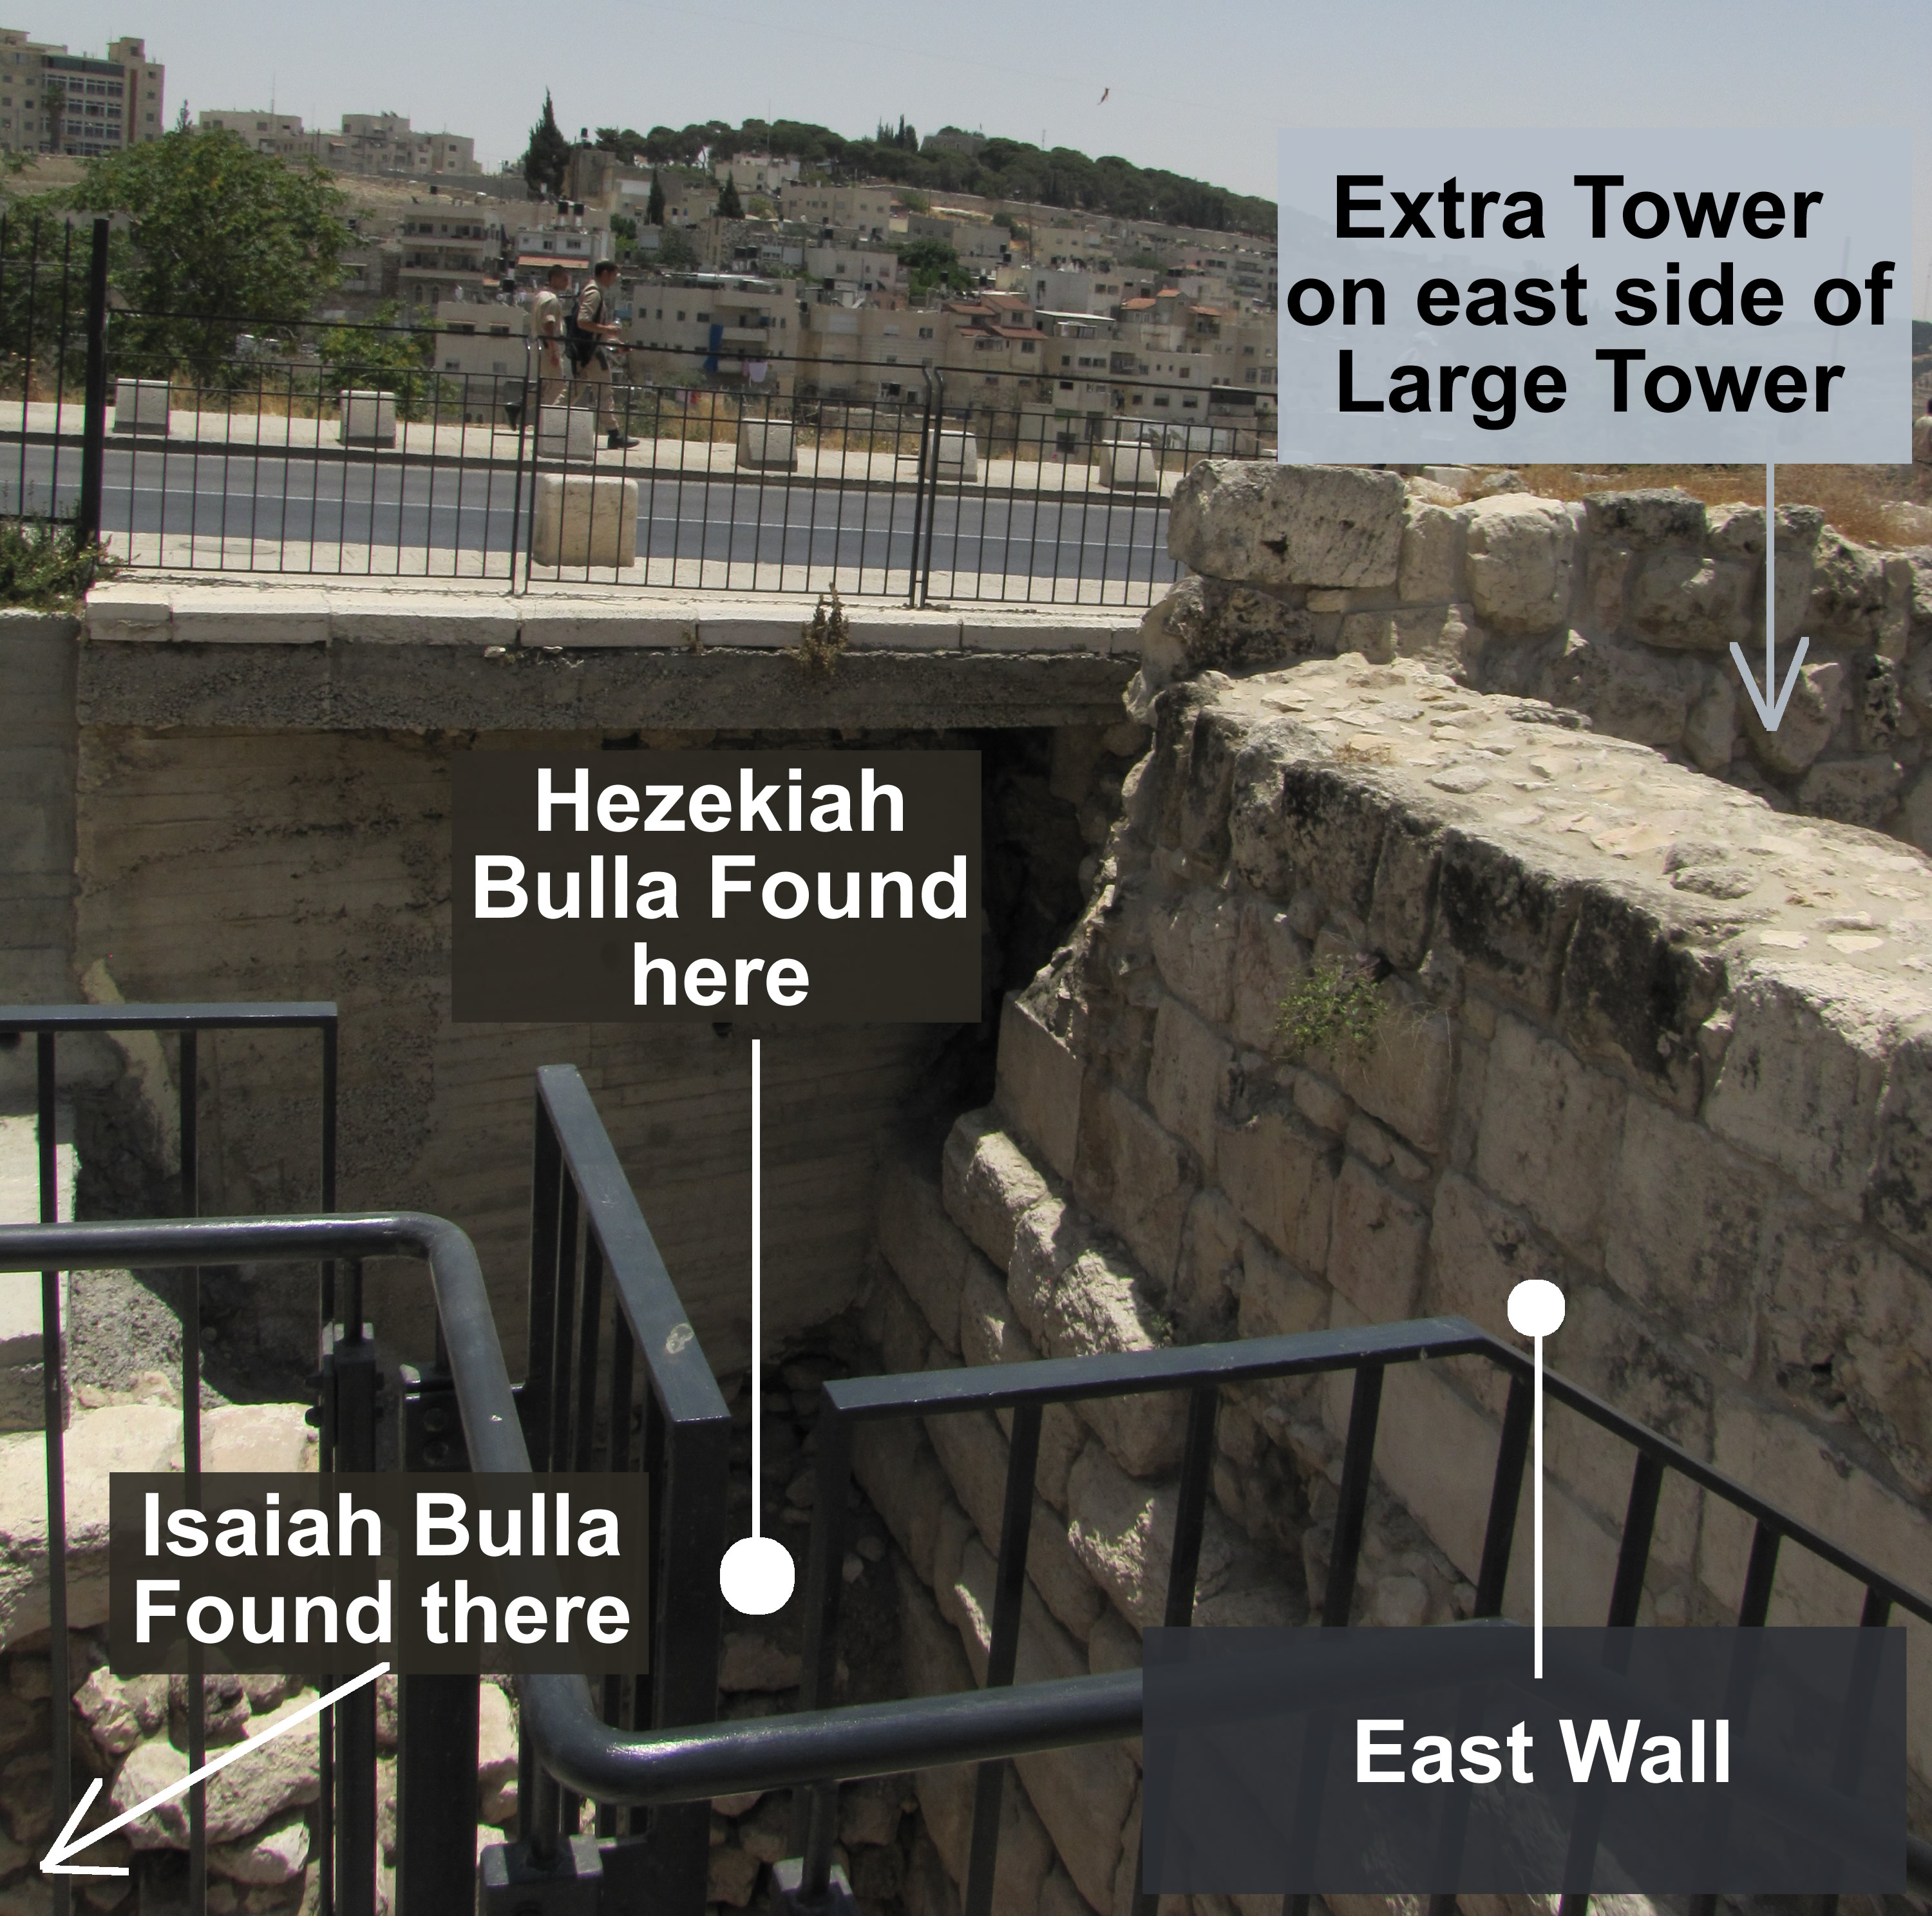 Location of Isaiah Bulla and Hezekiah Bulla discovery